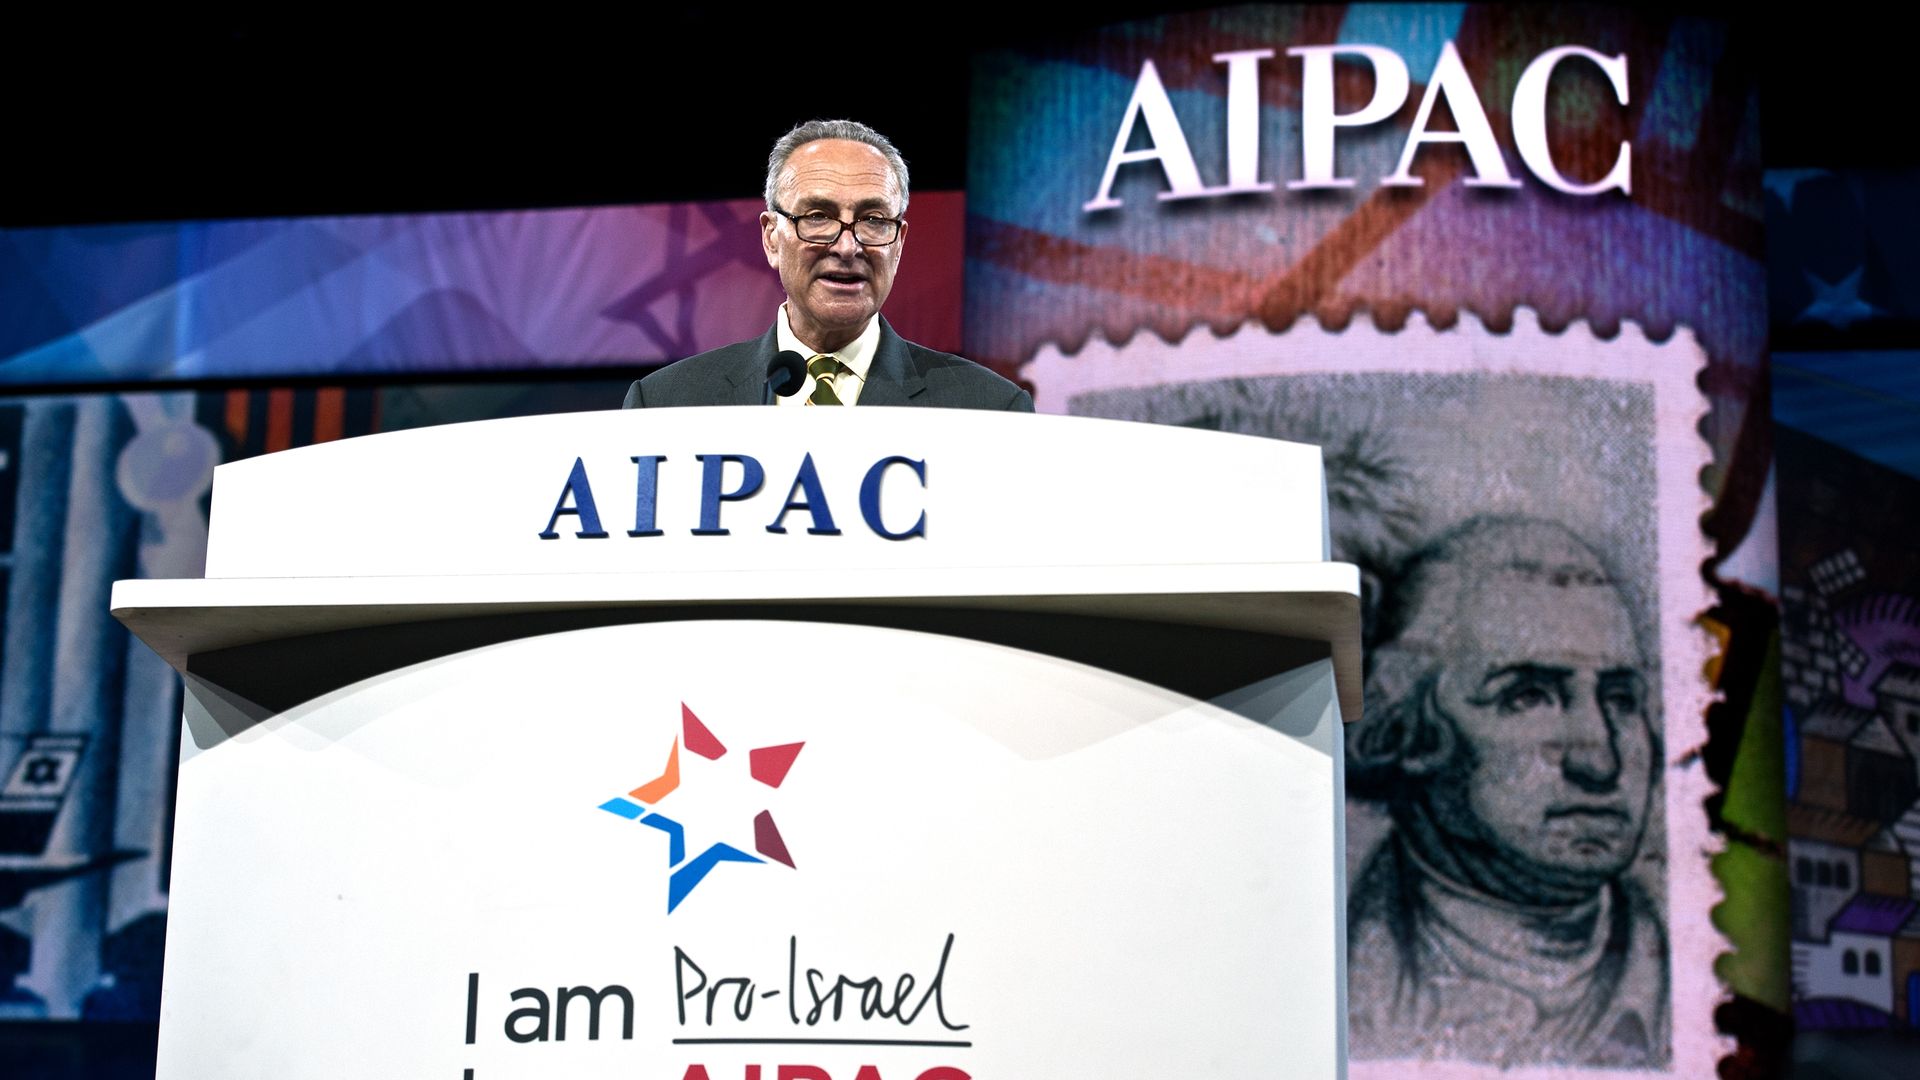 Senate Majority Leader Chuck Schumer is seen addressing an AIPAC convention.